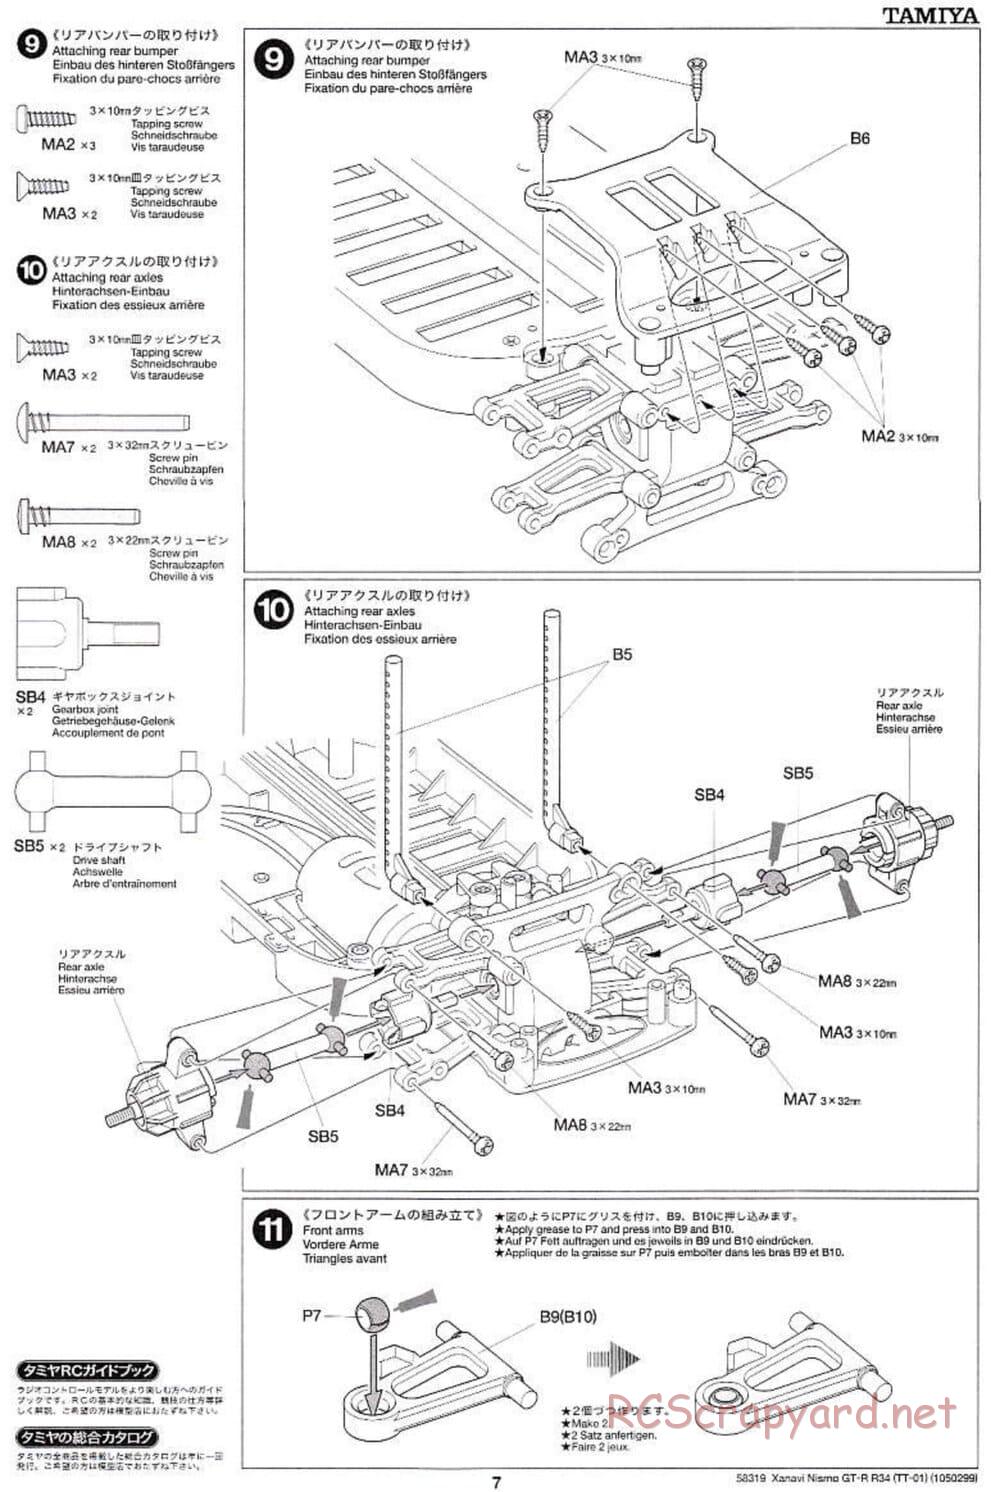 Tamiya - Xanavi Nismo GT-R R34 - TT-01 Chassis - Manual - Page 7